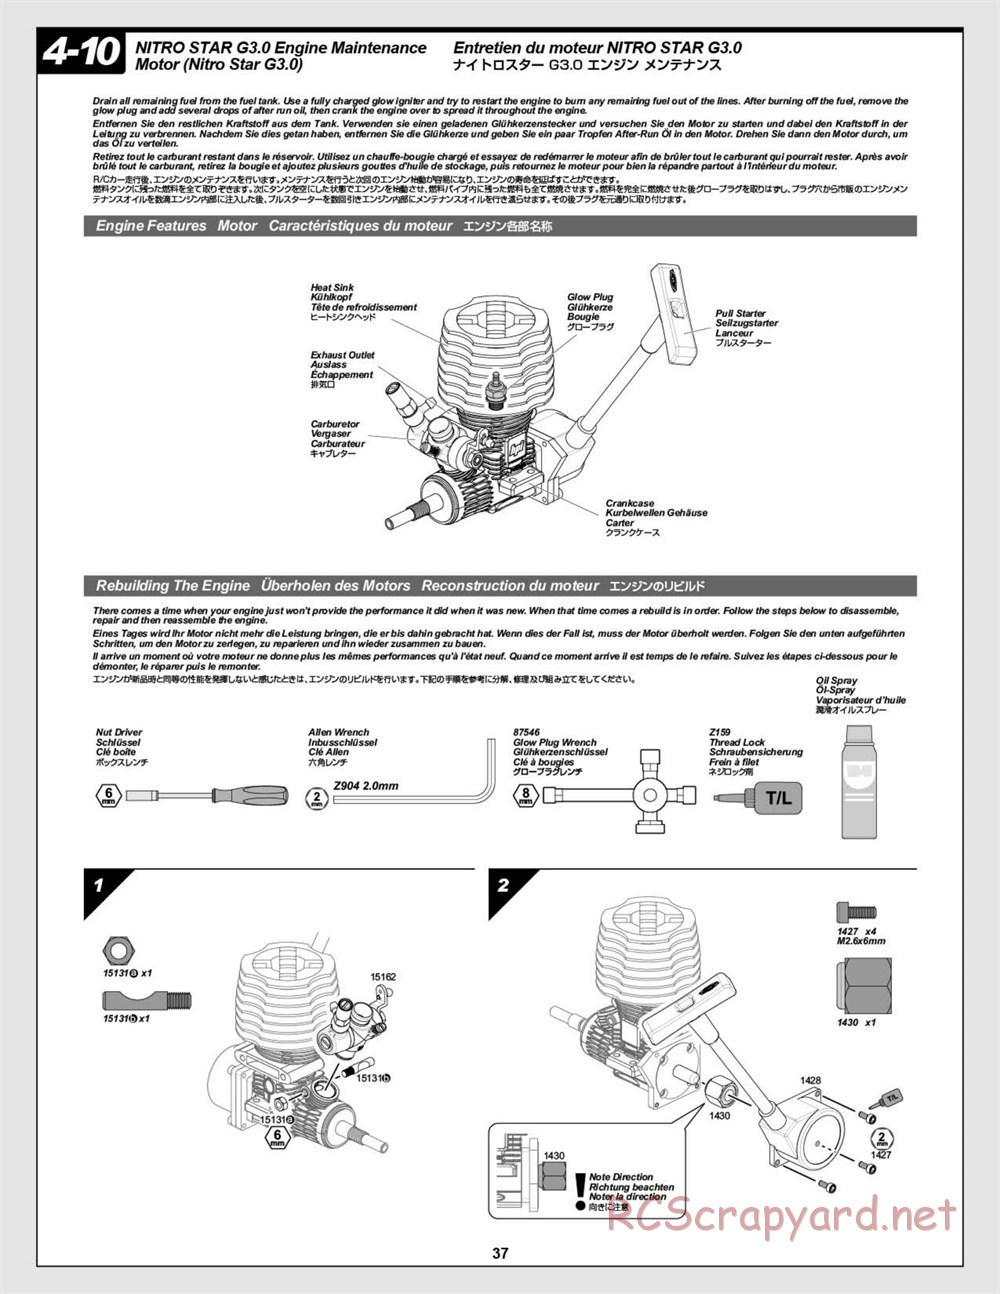 HPI - Firestorm 10T - Manual - Page 37